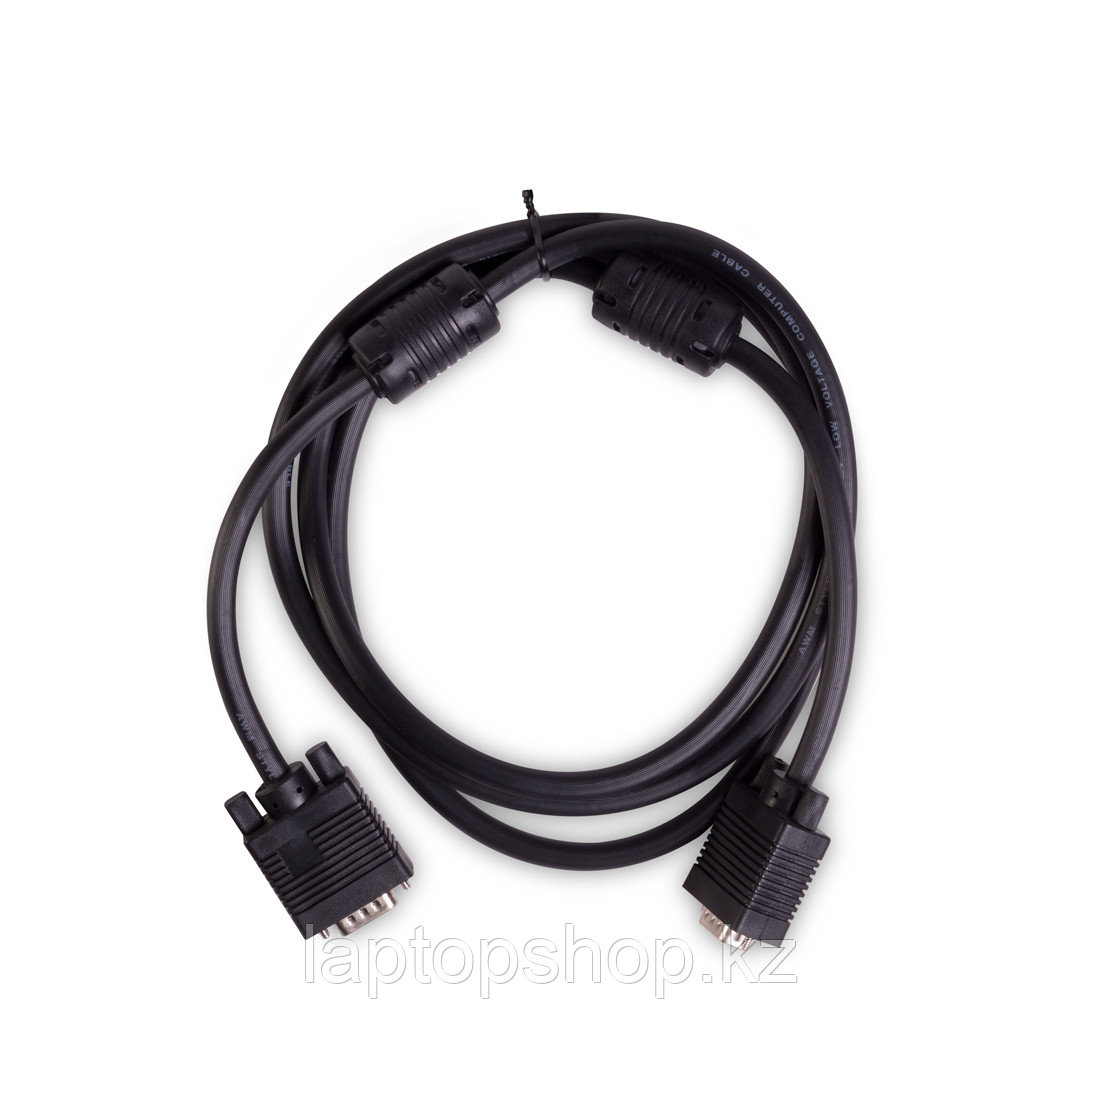 Интерфейсный кабель iPower iPiVGAMM18, VGA 15M/15M 1.8 м., Чёрный, фото 1